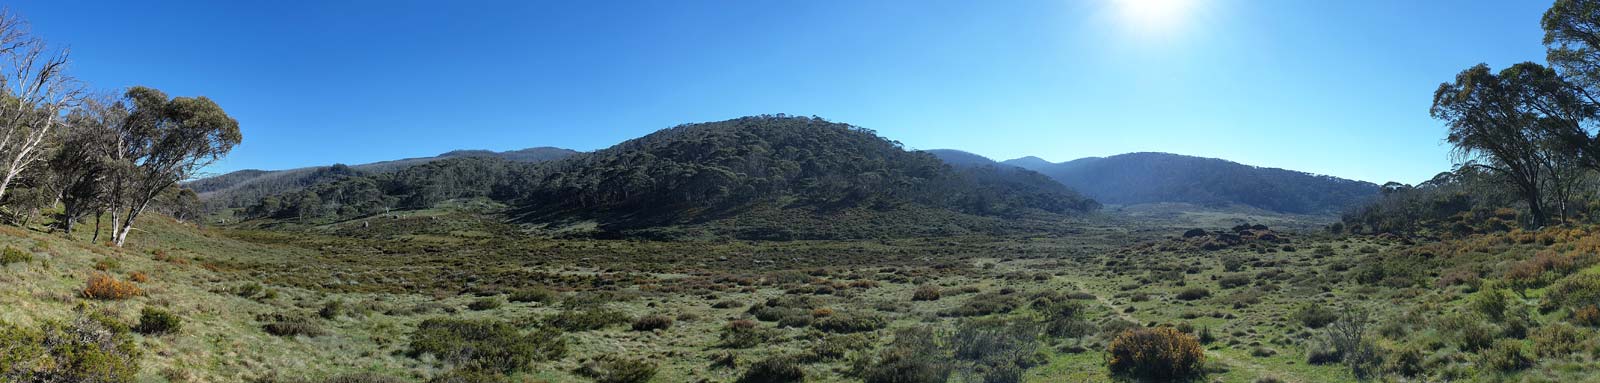 View of healthlands and hills